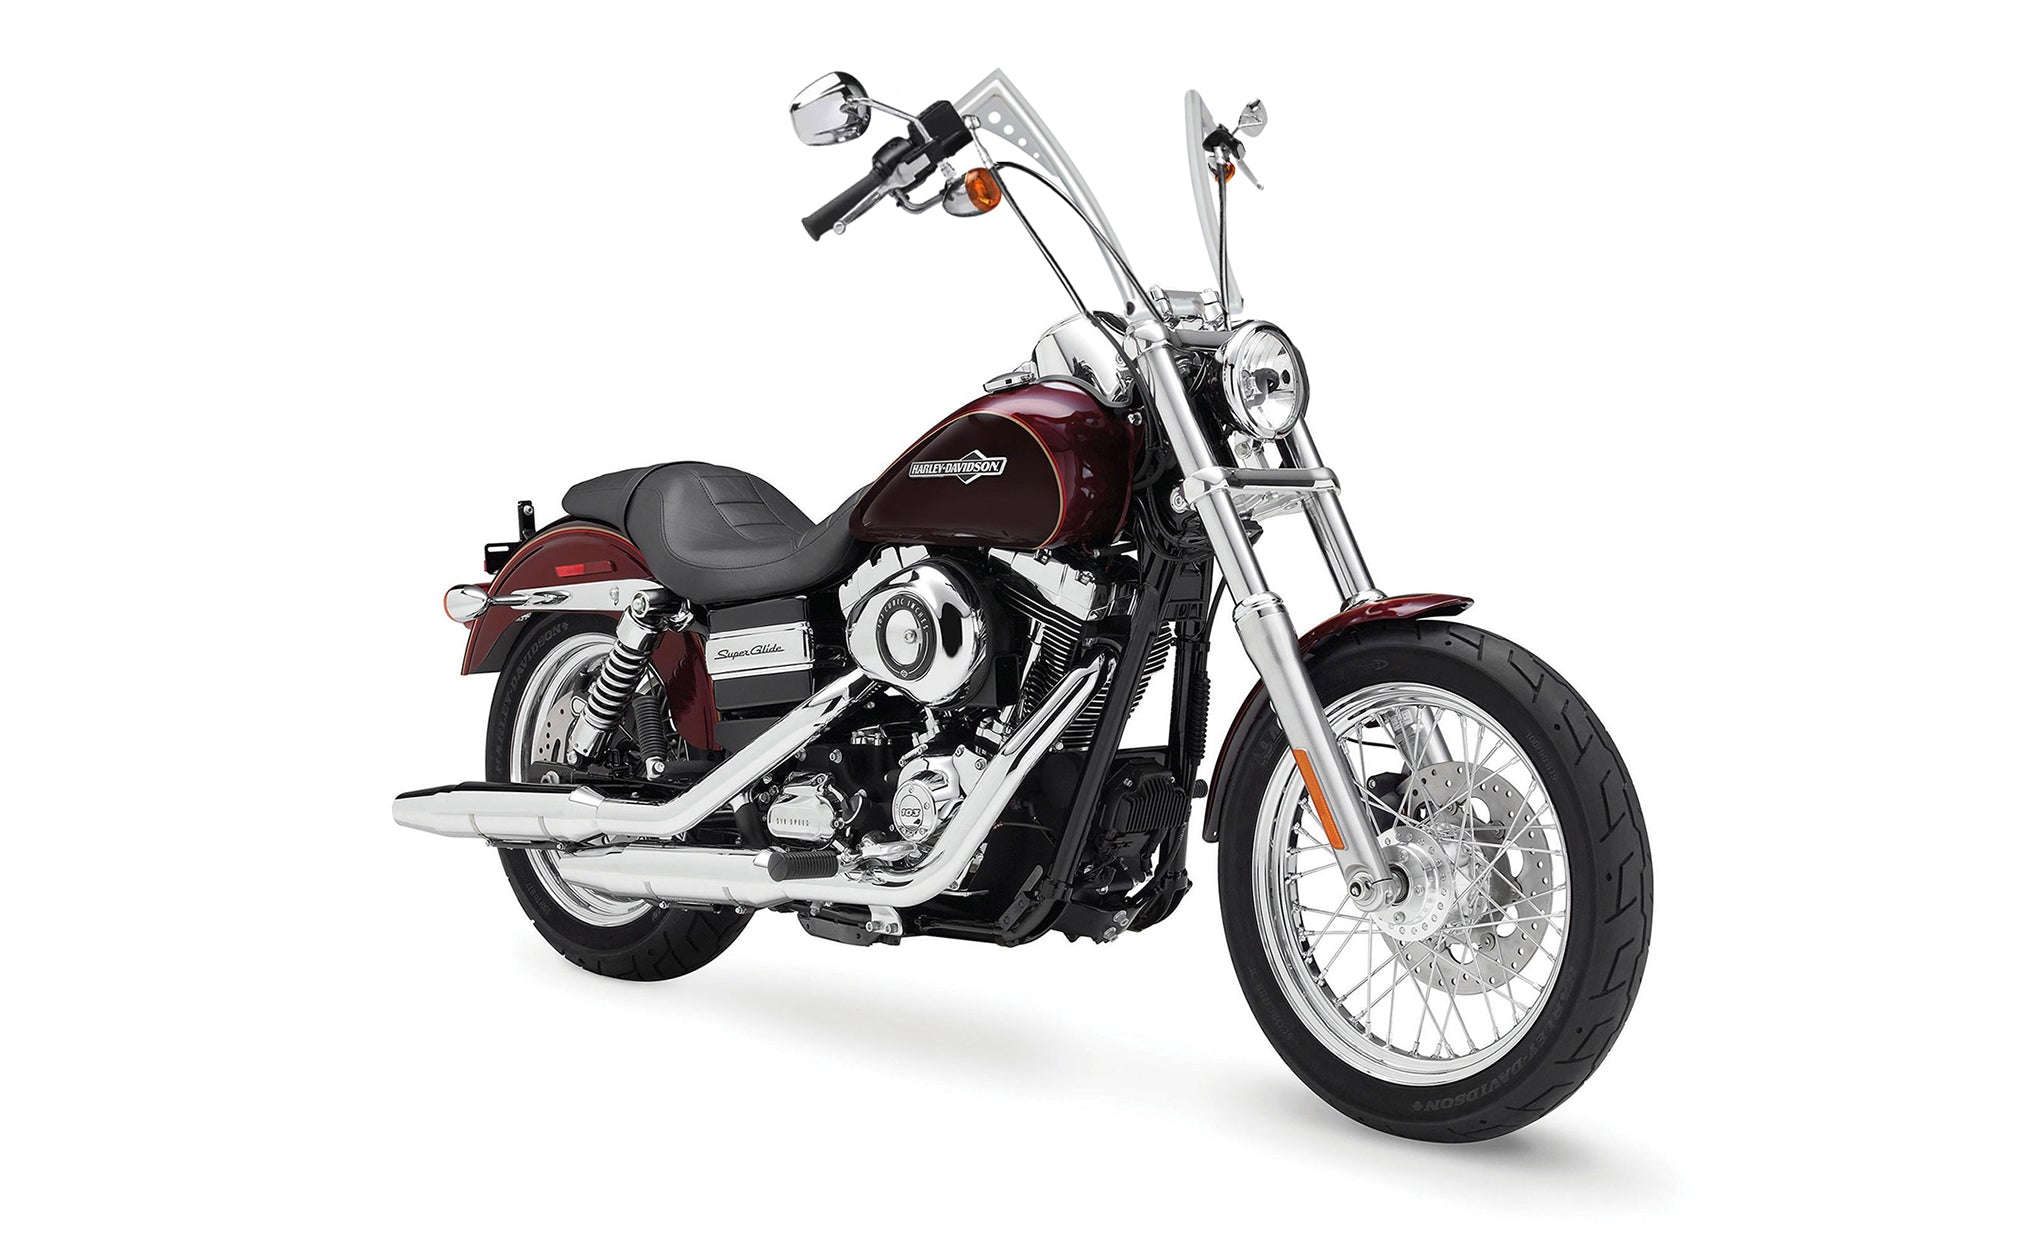 Viking Iron Born 12" Handlebar For Harley Dyna Super Glide FXD Chrome Bag on Bike View @expand